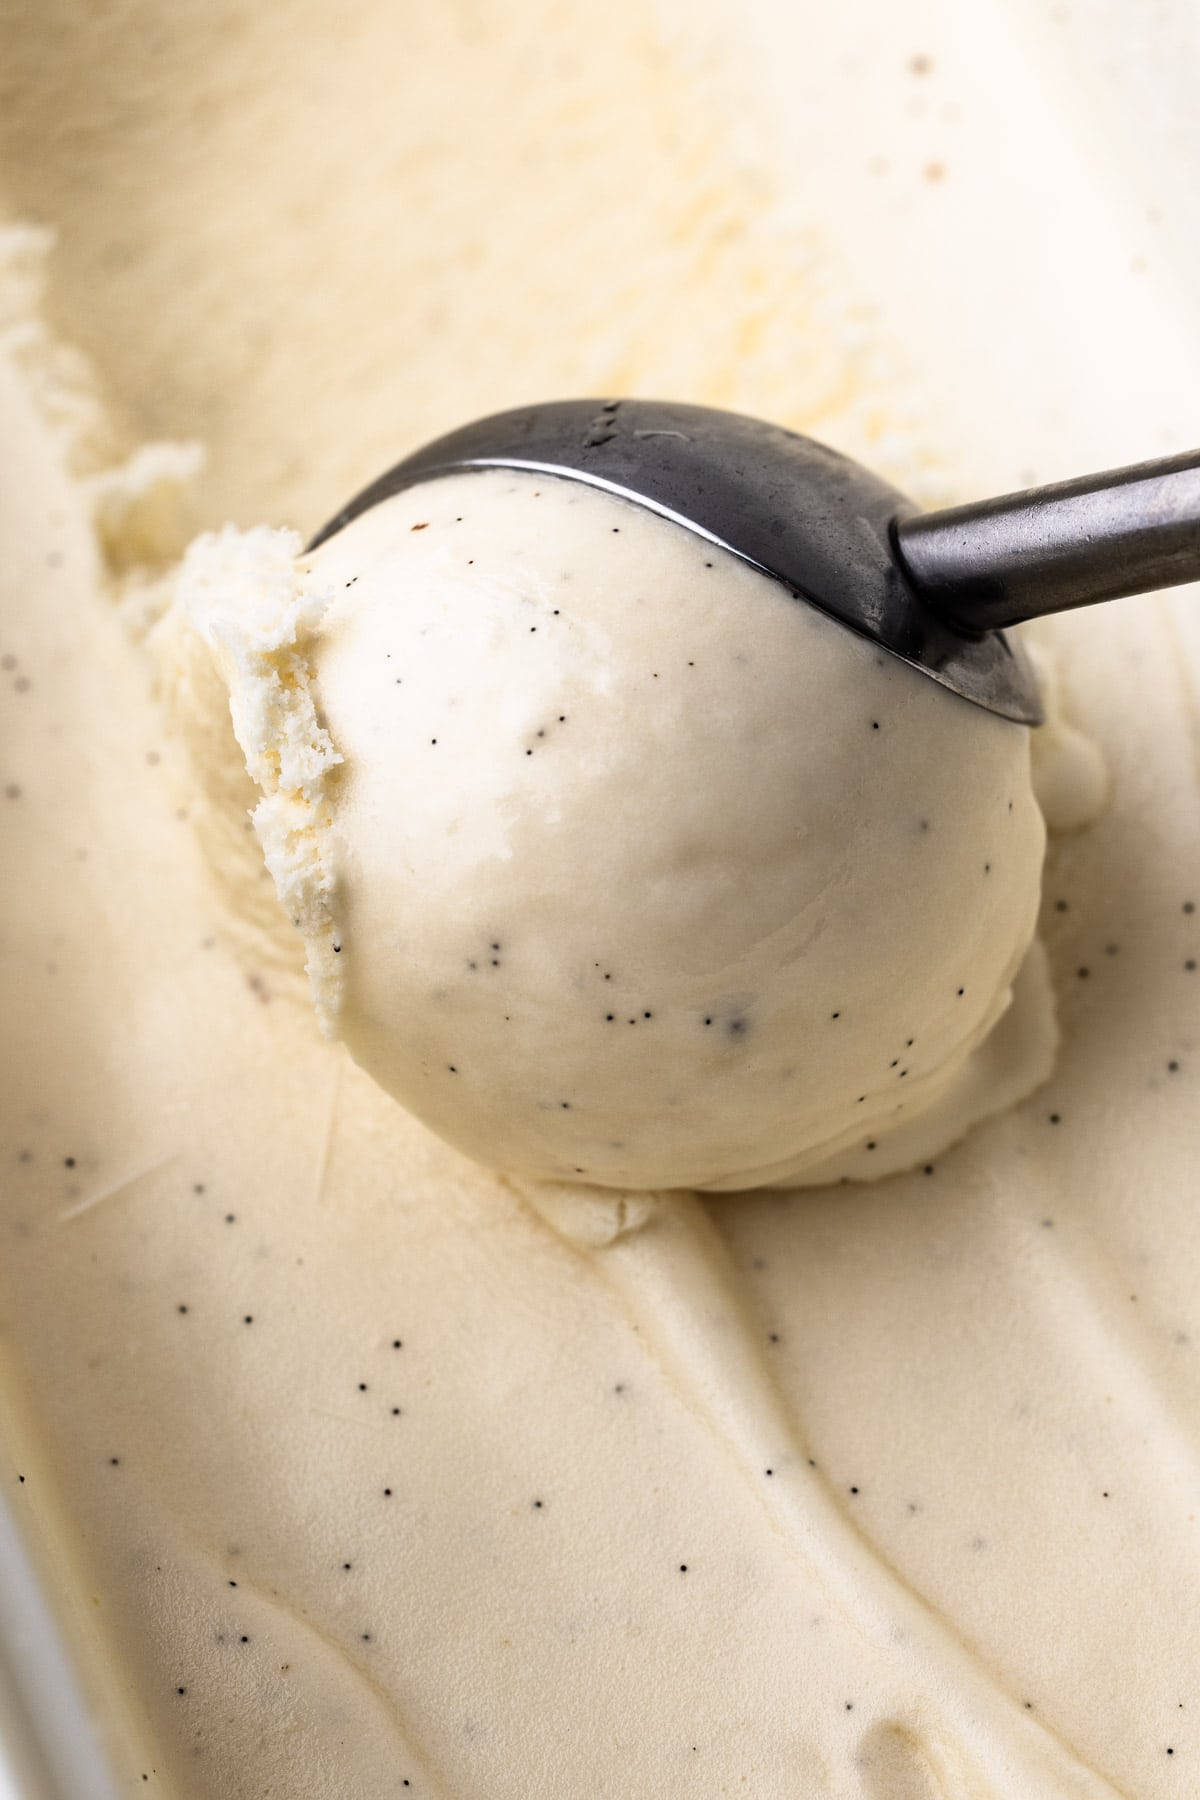 A scoop of vanilla ice cream.